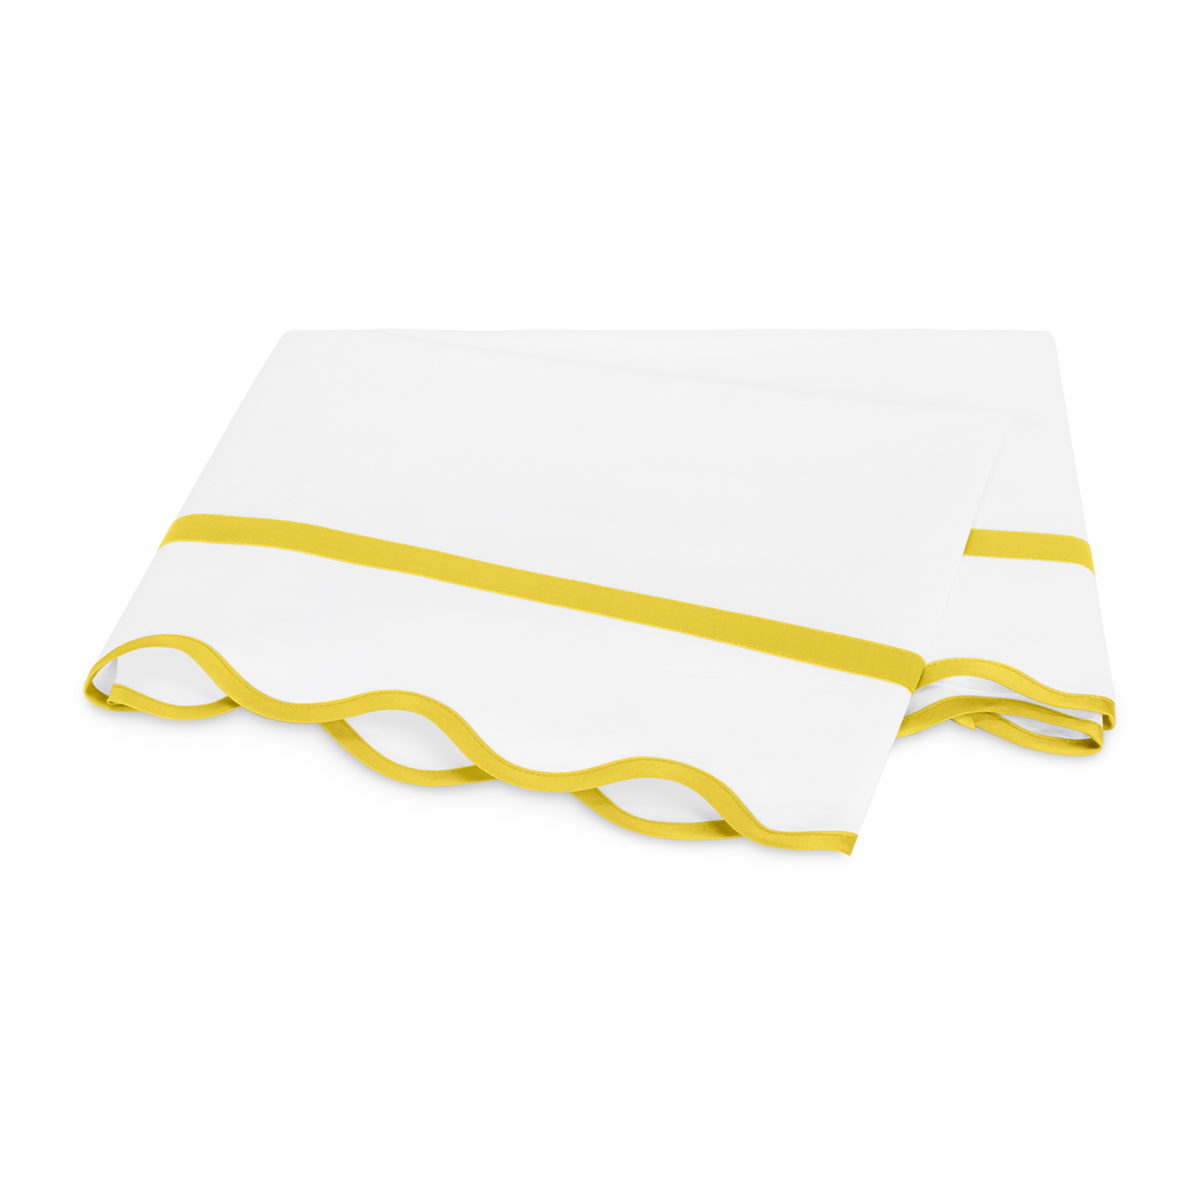 Folded Flat Sheet of Matouk Cornelia Bedding in Lemon Color